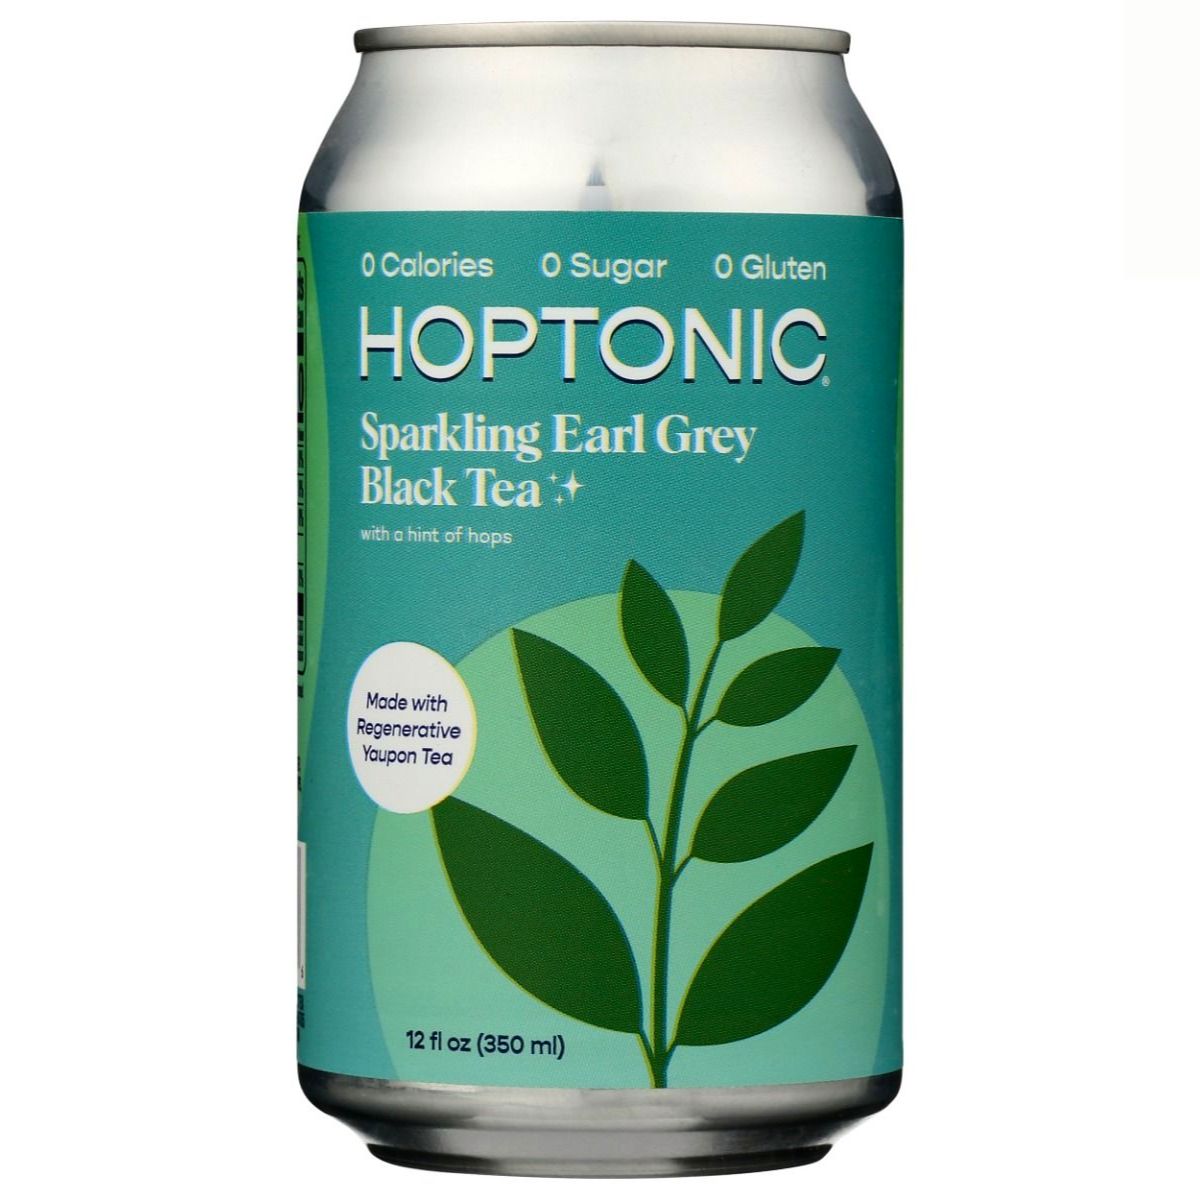 Hoptonic Sparkling Earl Grey Black Tea - 12 fl oz.